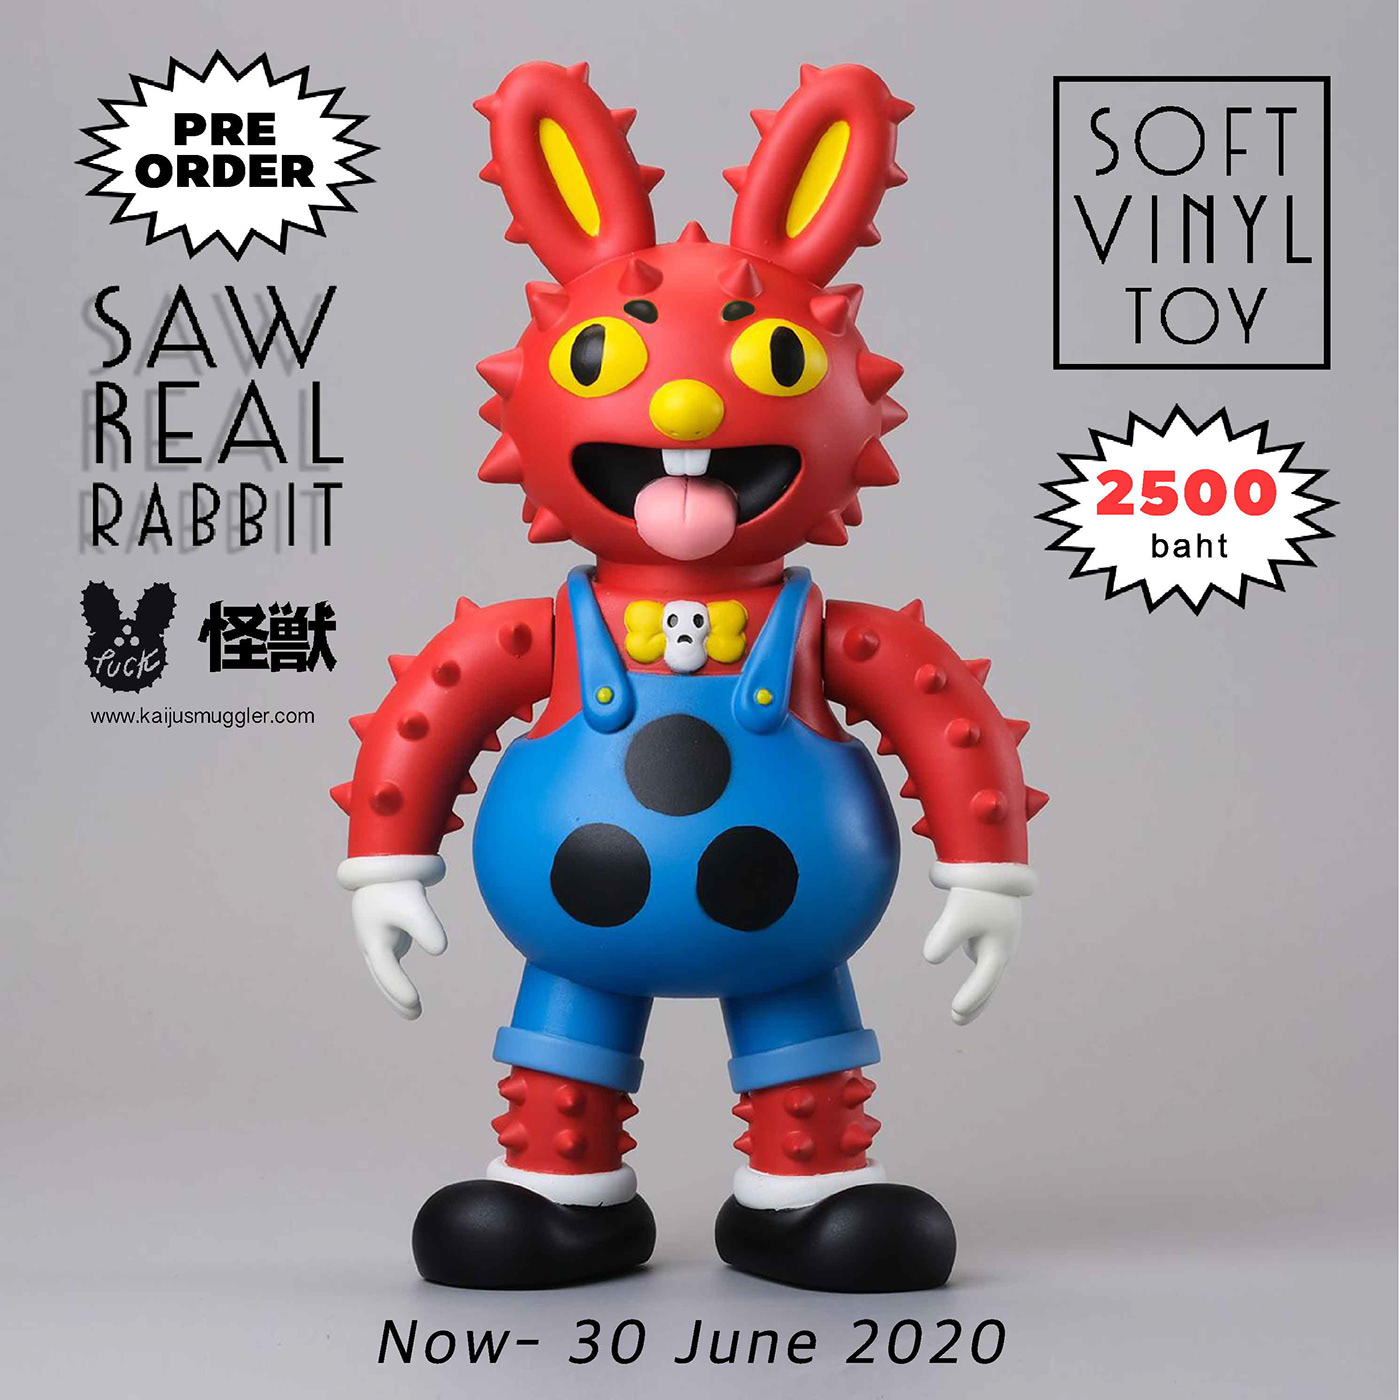 3puck puck sawreal rabbit soft vinyl toy Toy Soft Vinyl